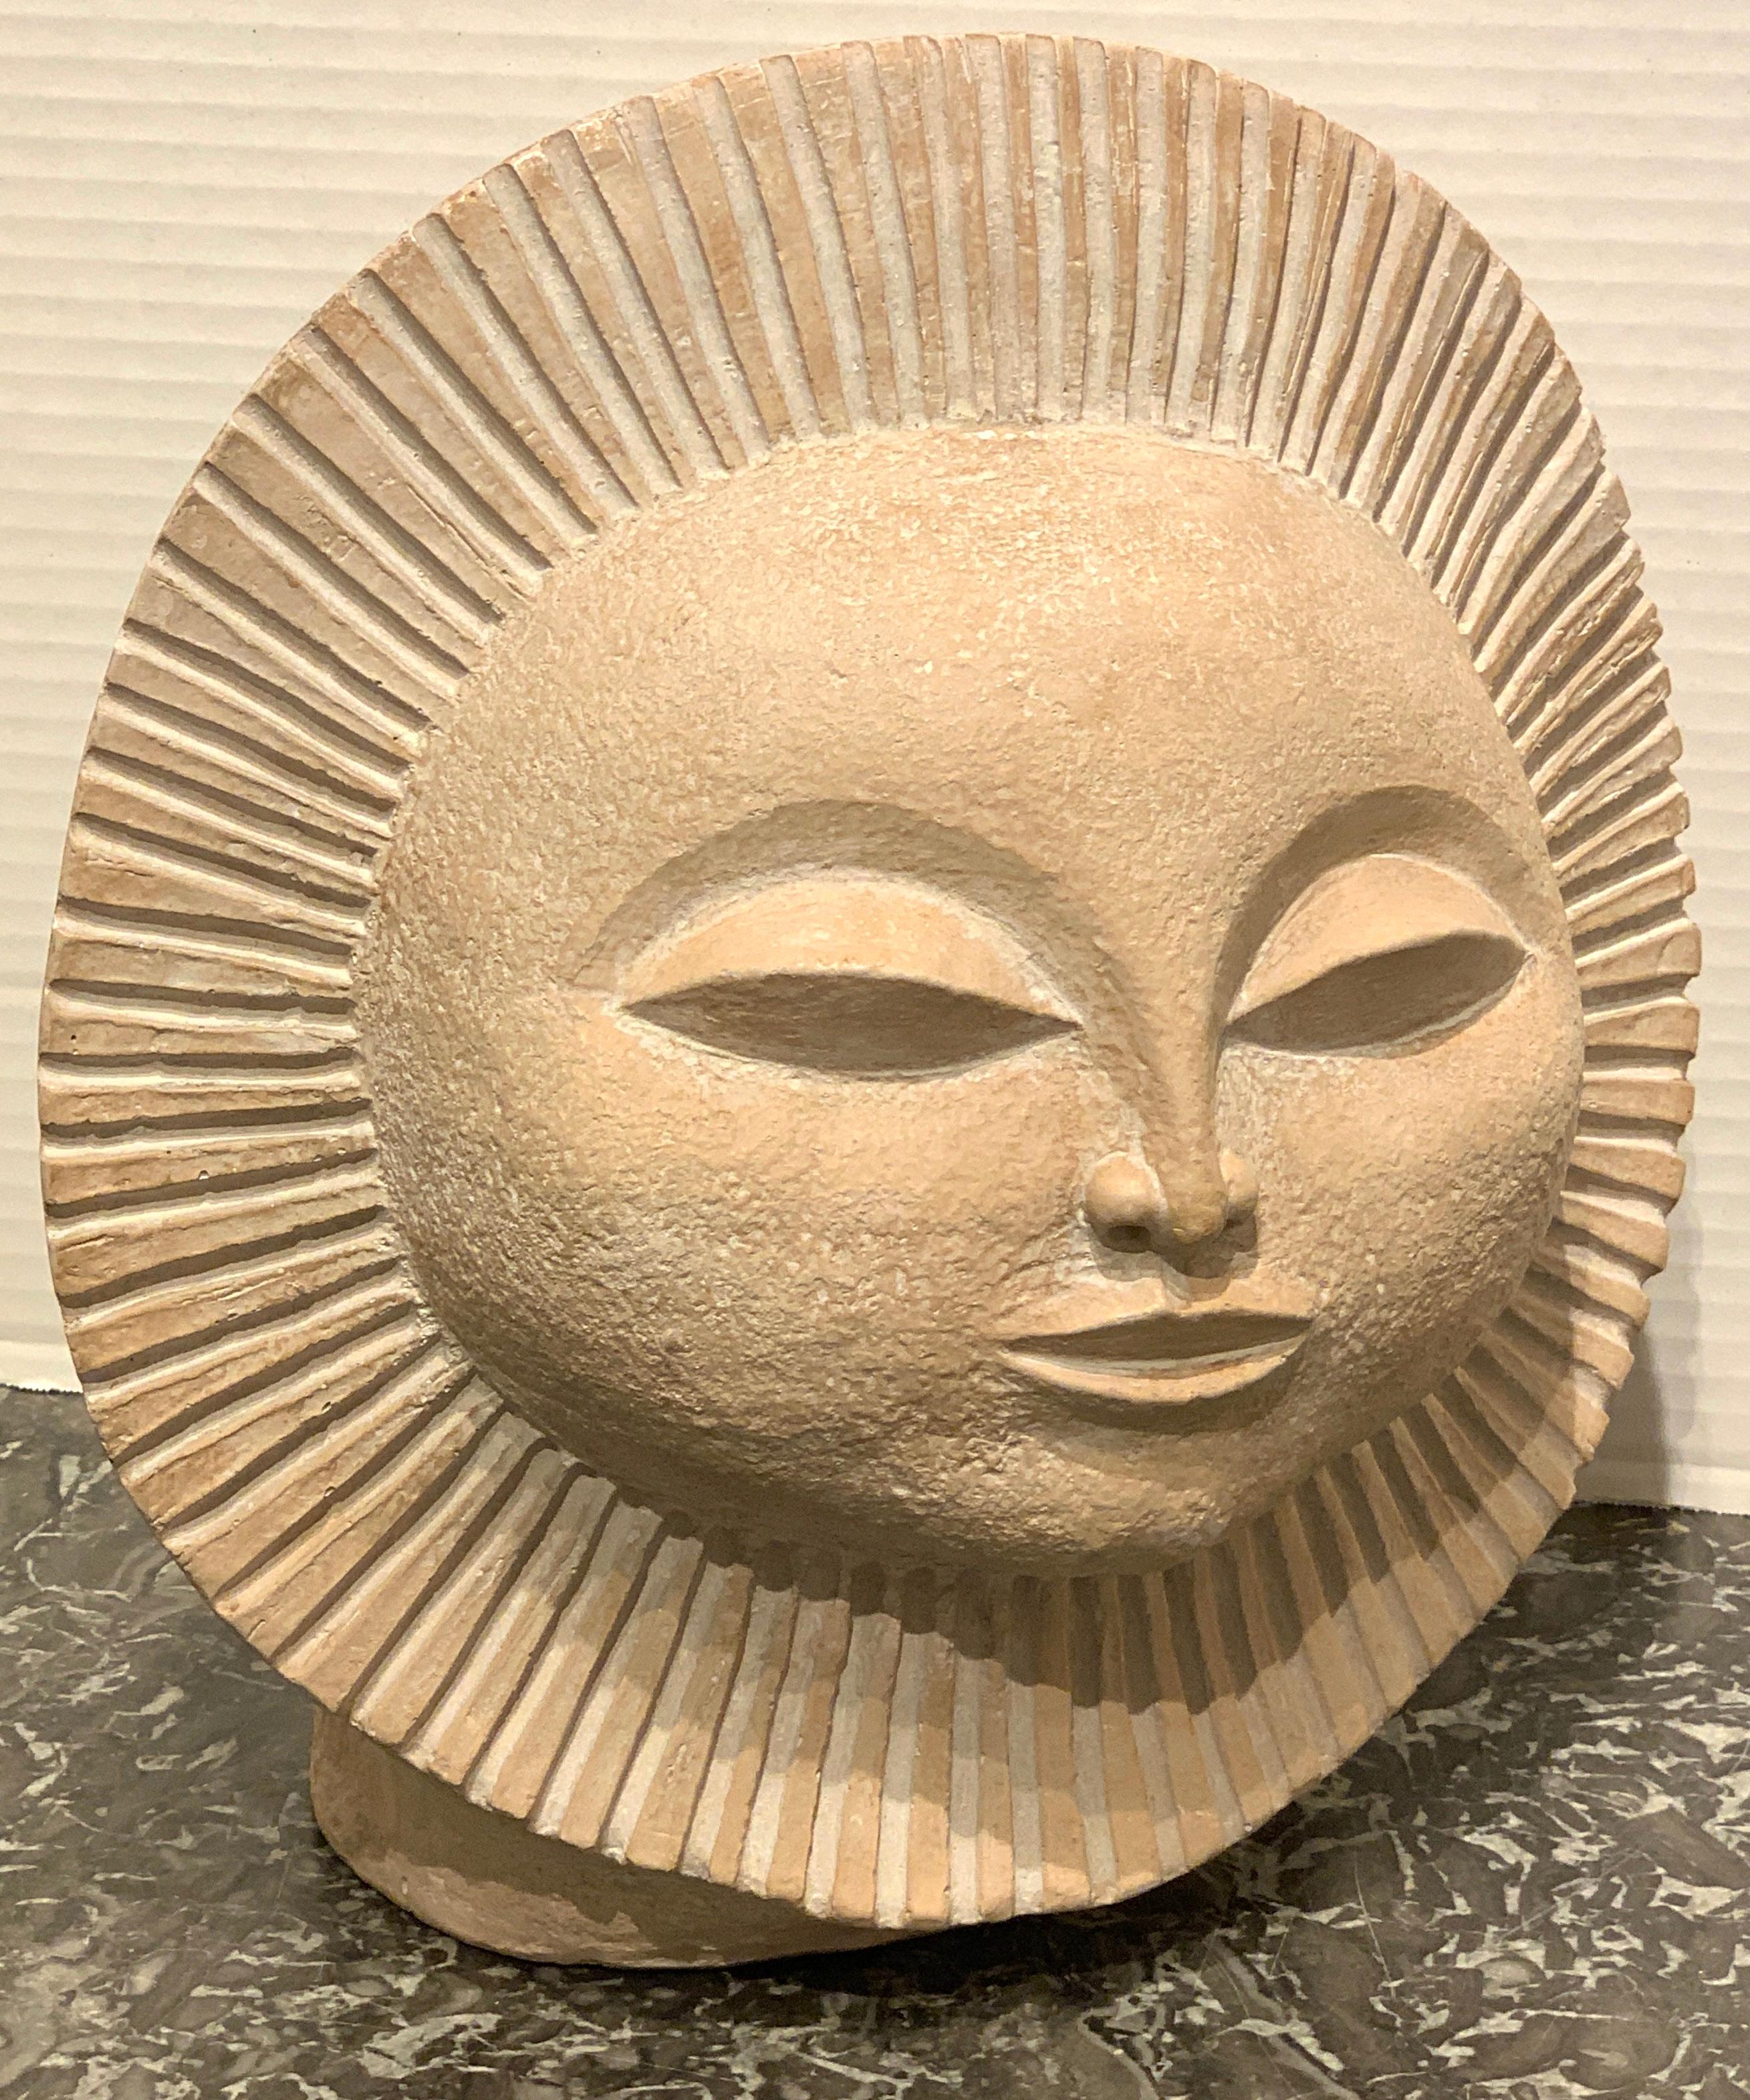 North American Sunburst Sculpture by Paul Bellardo, 1968